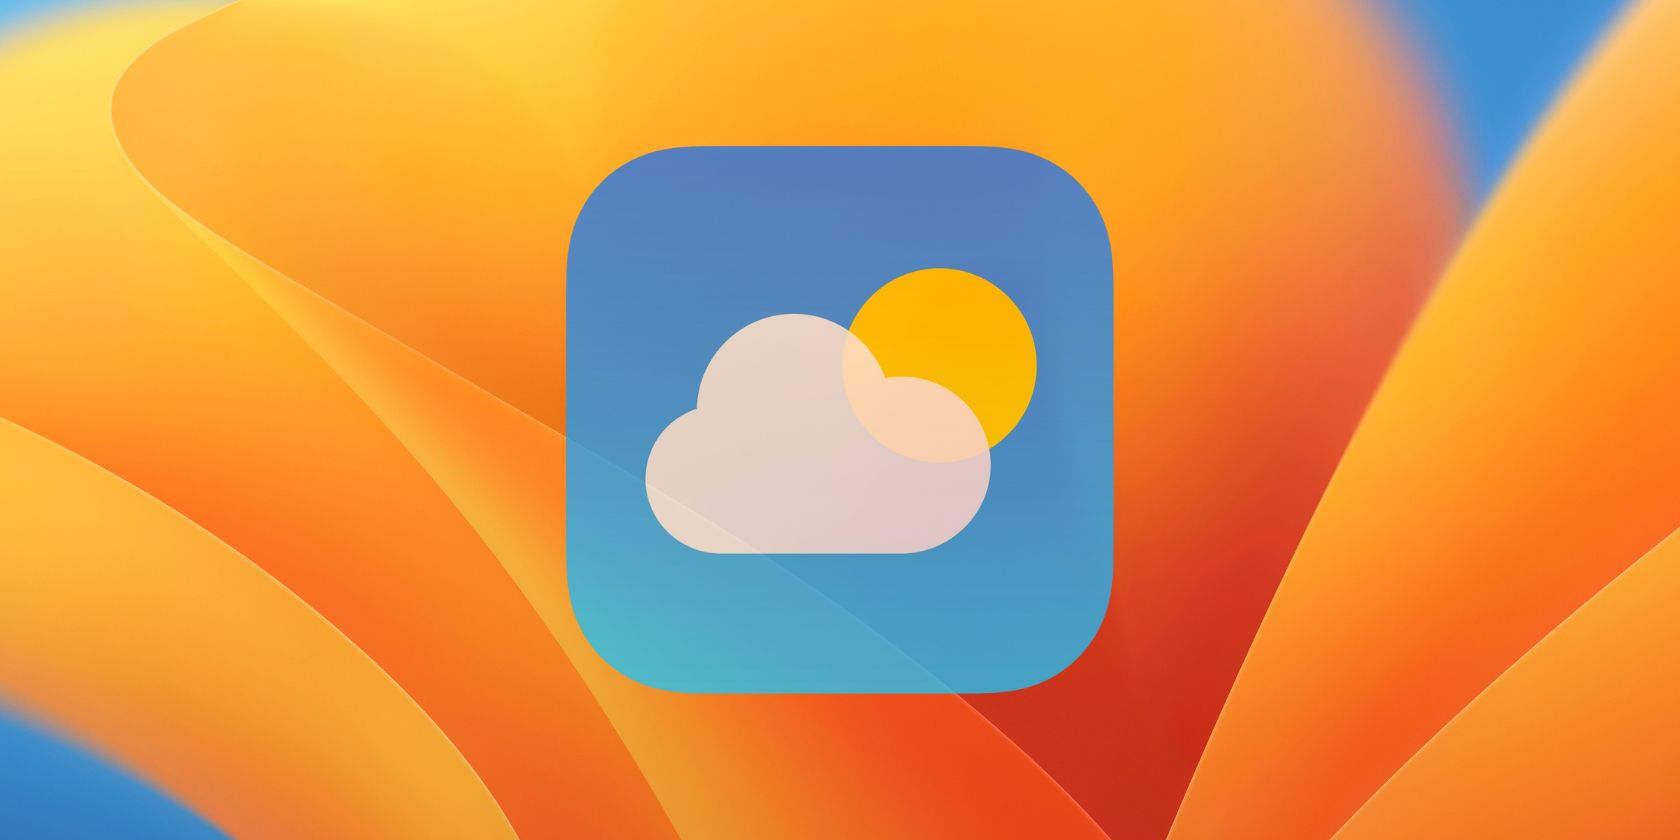 Weather app icon on the default macOS Ventura wallpaper.